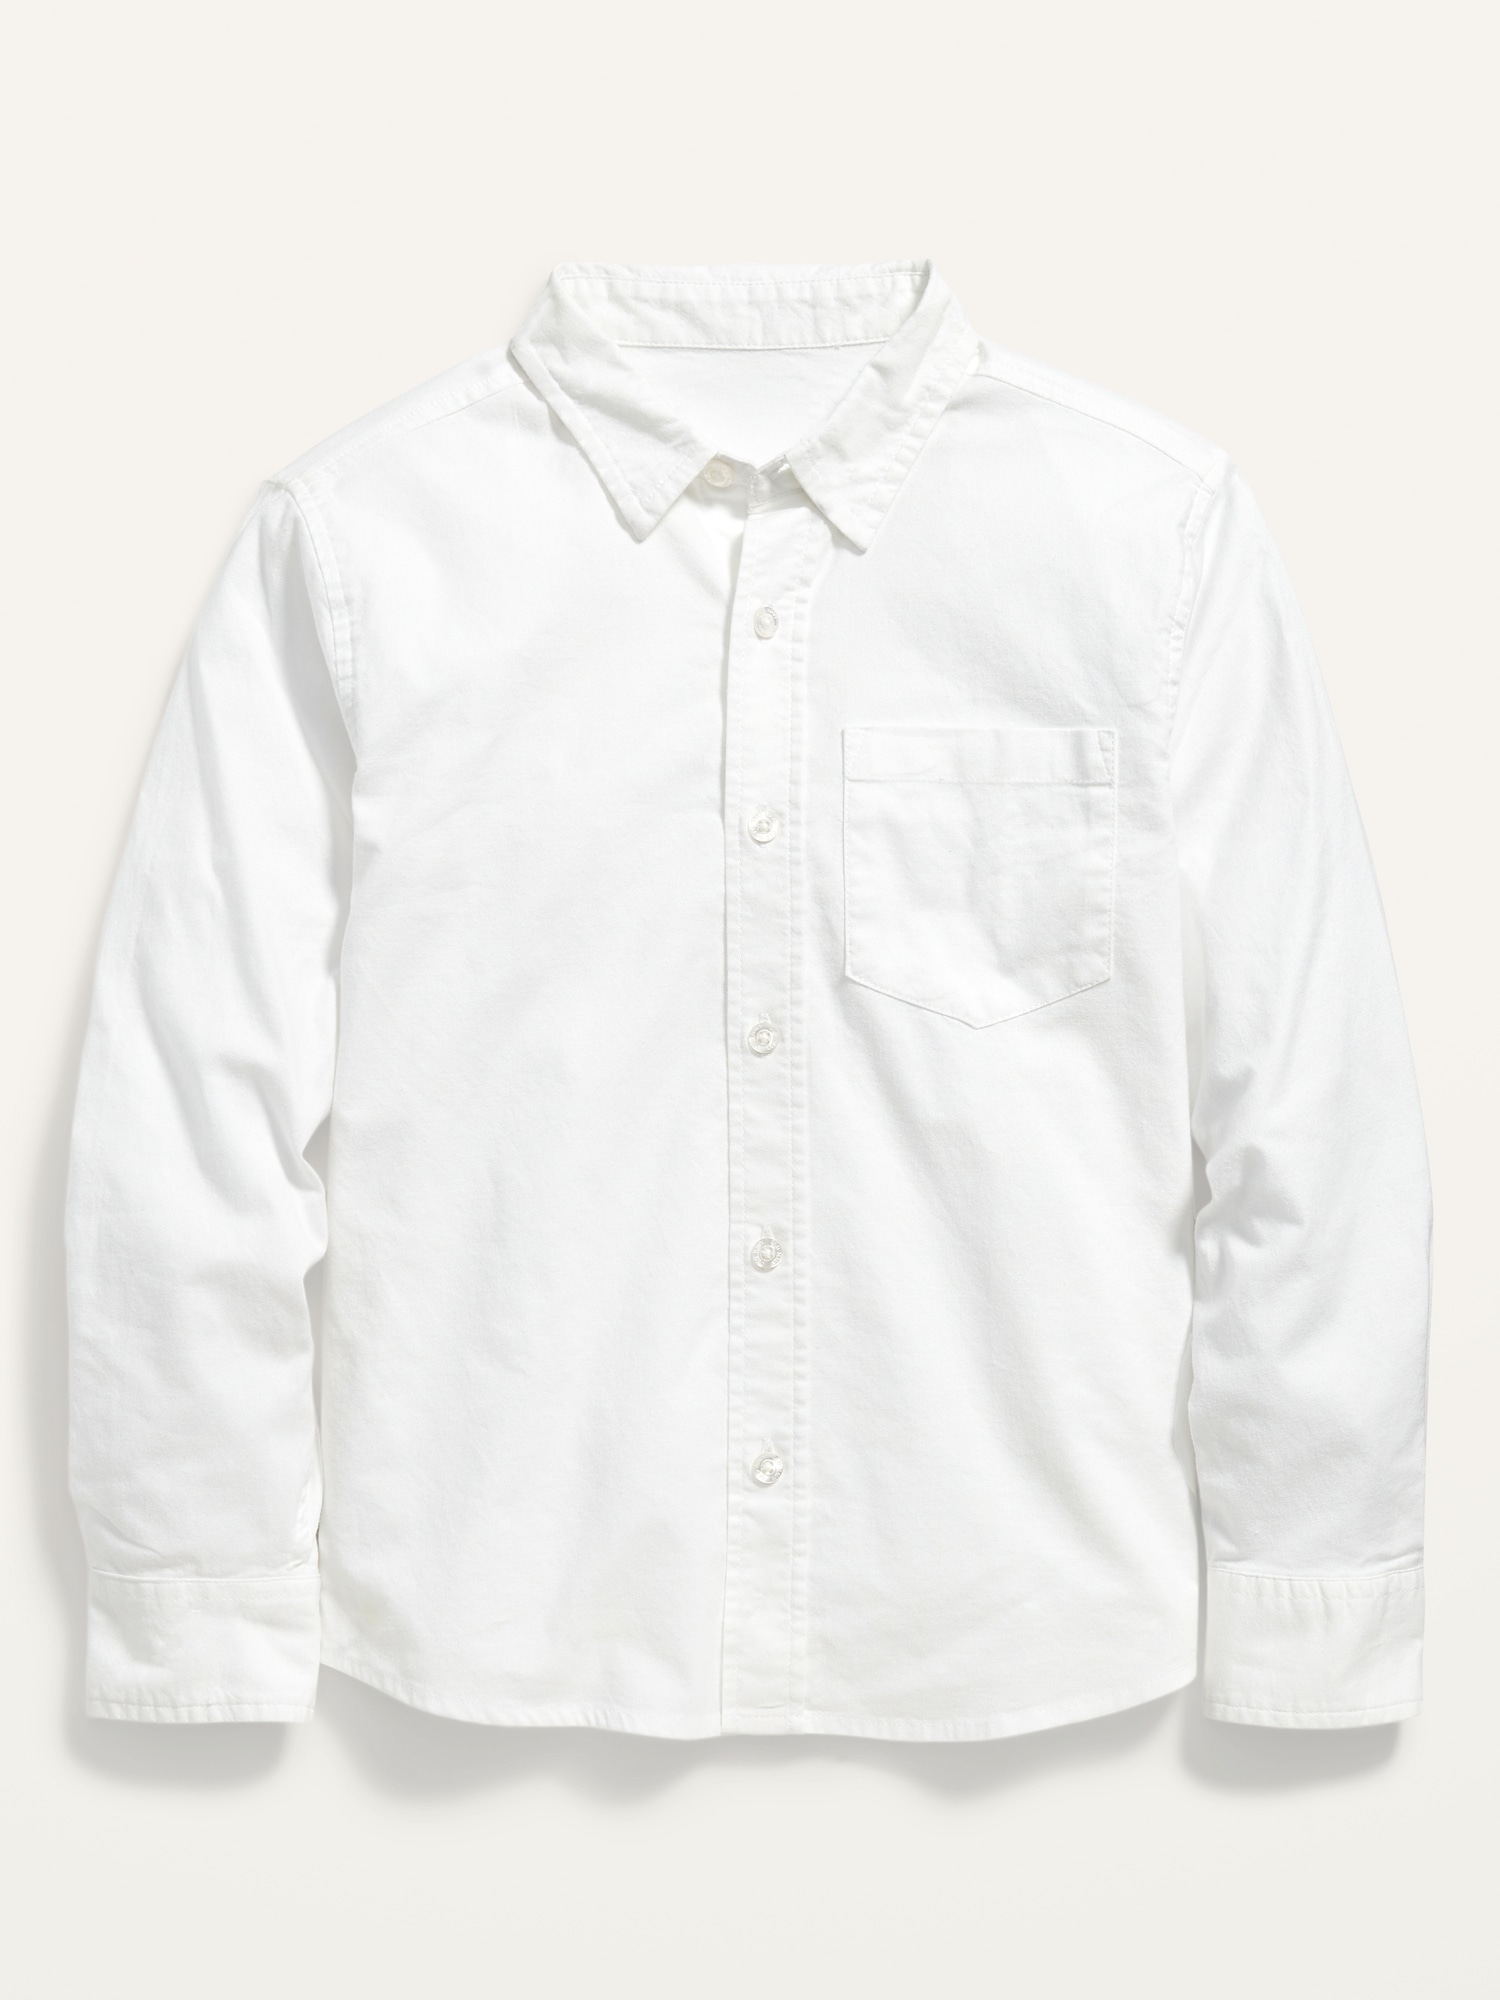 White Short Sleeve Oxford Shirt For Women - LionsDeal